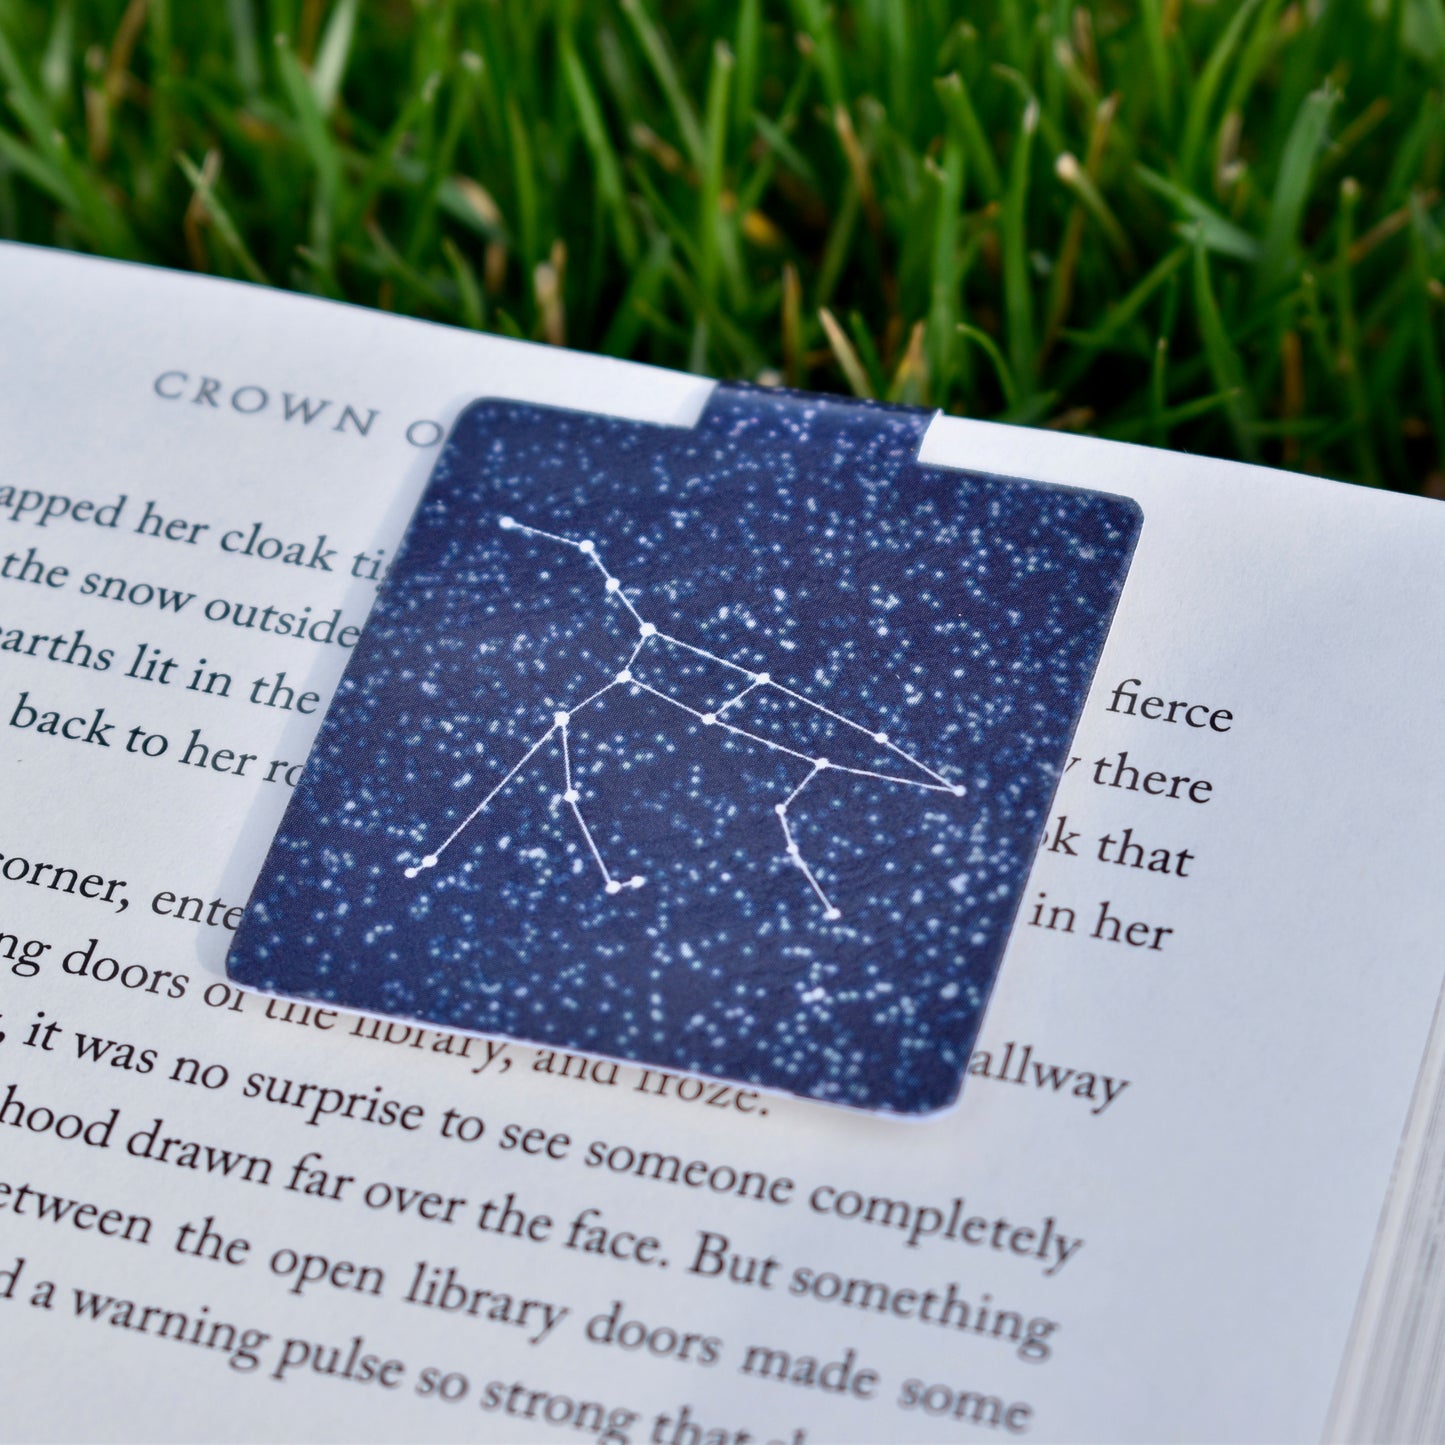 Darkest Nights, Brightest Stars Magnetic Bookmark